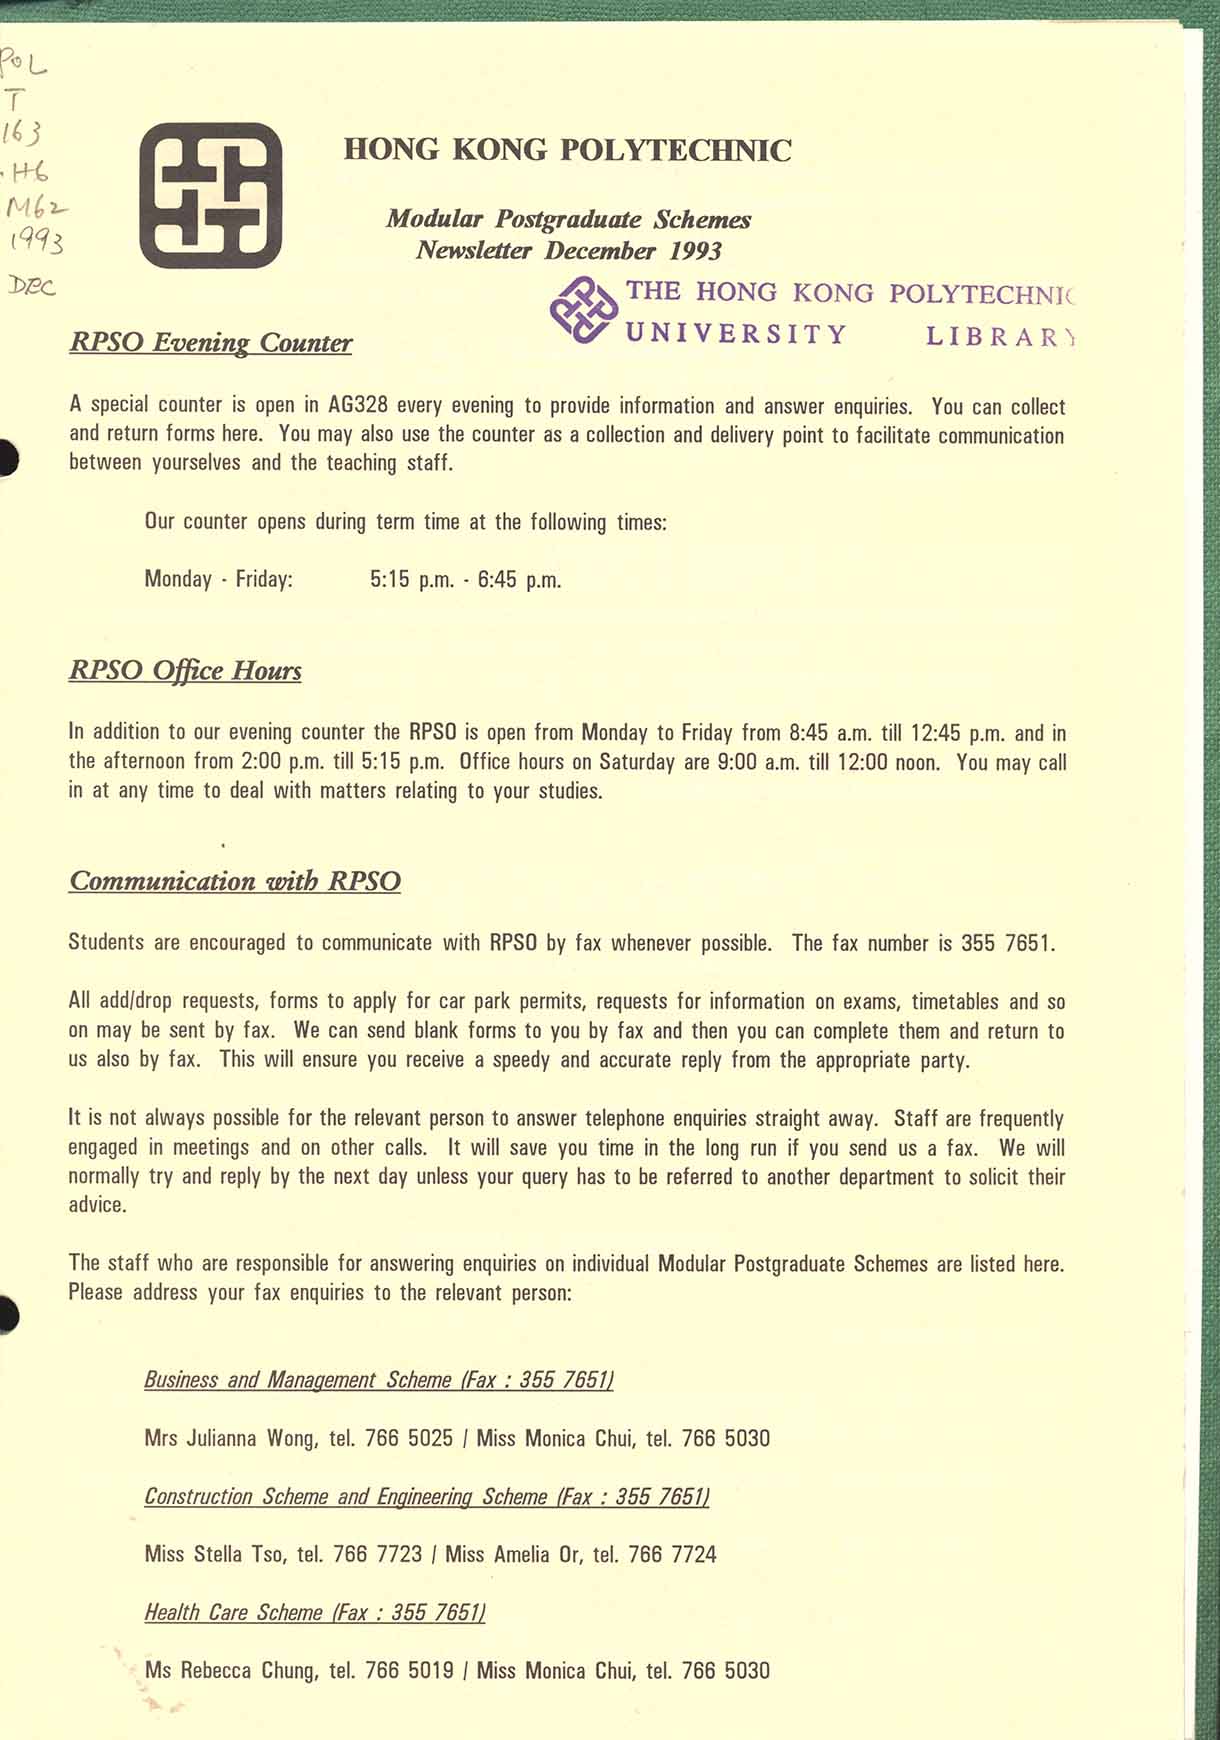 Modular postgraduate schemes newsletter [1993-1998]